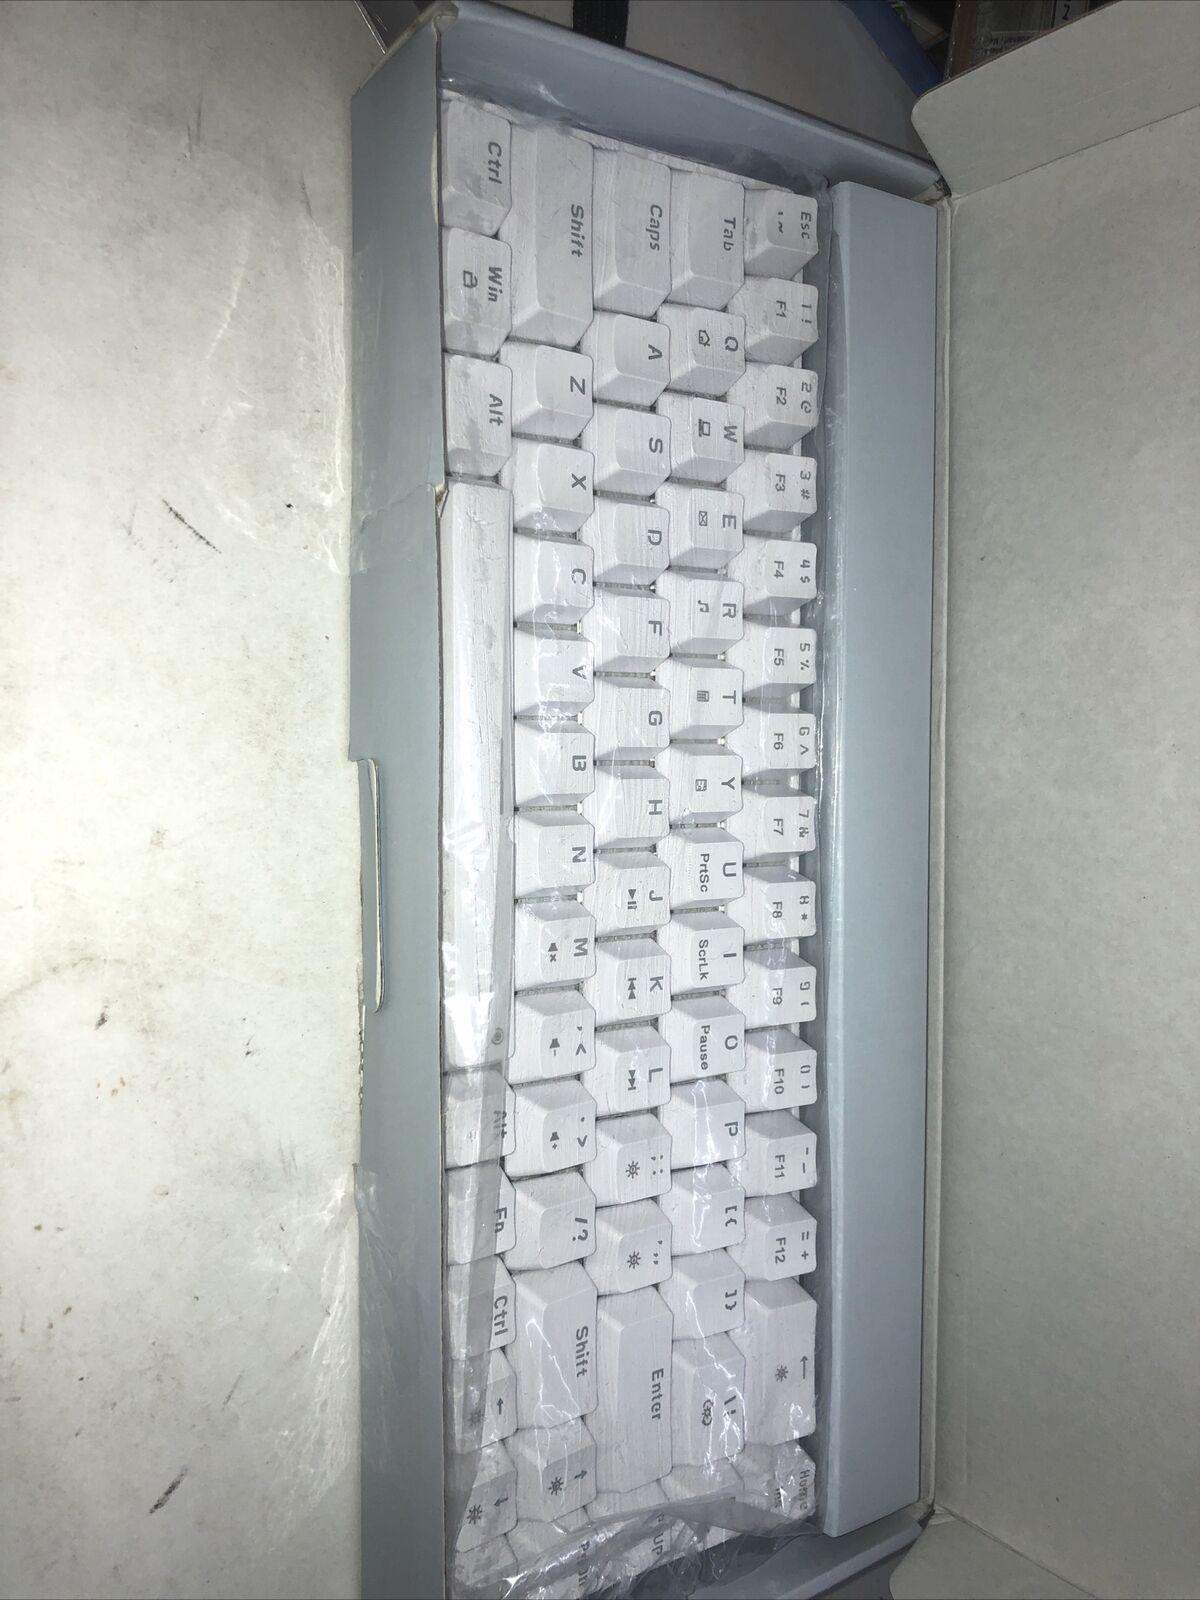 X Tmkb T68Se Wired 60% Mechanical Gaming Keyboard, Rgb Backlit Ultra-Compact NN